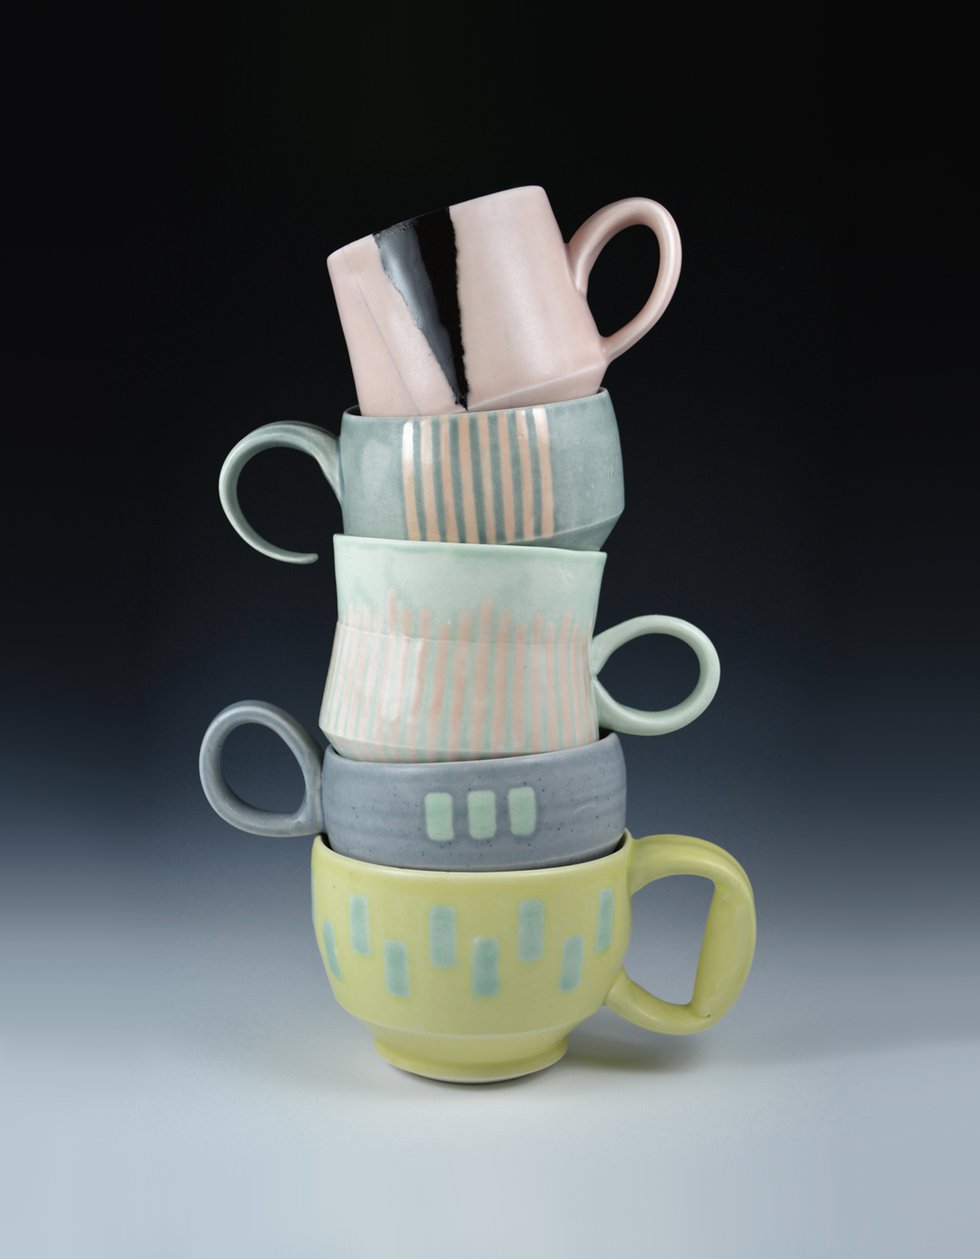 Stacked Mugs by Mynthia McDaniel